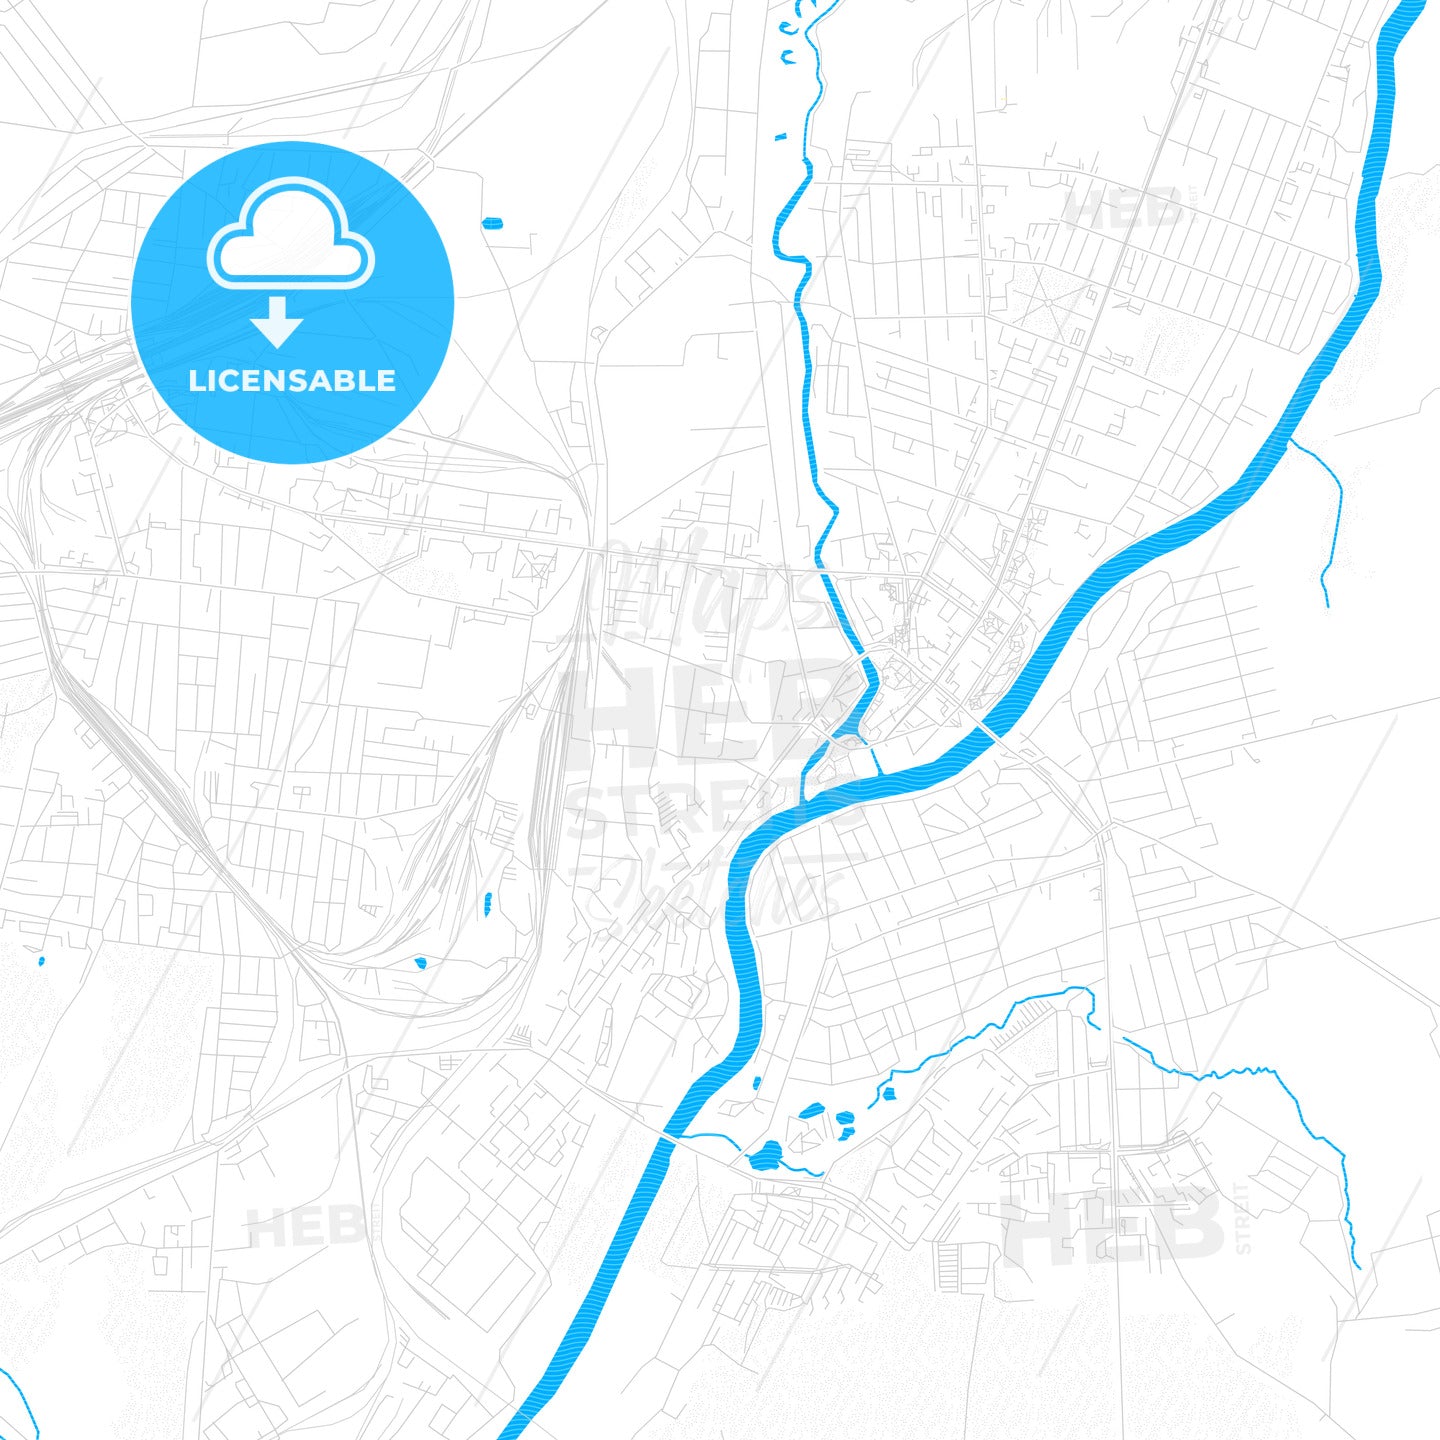 Orsha, Belarus PDF vector map with water in focus